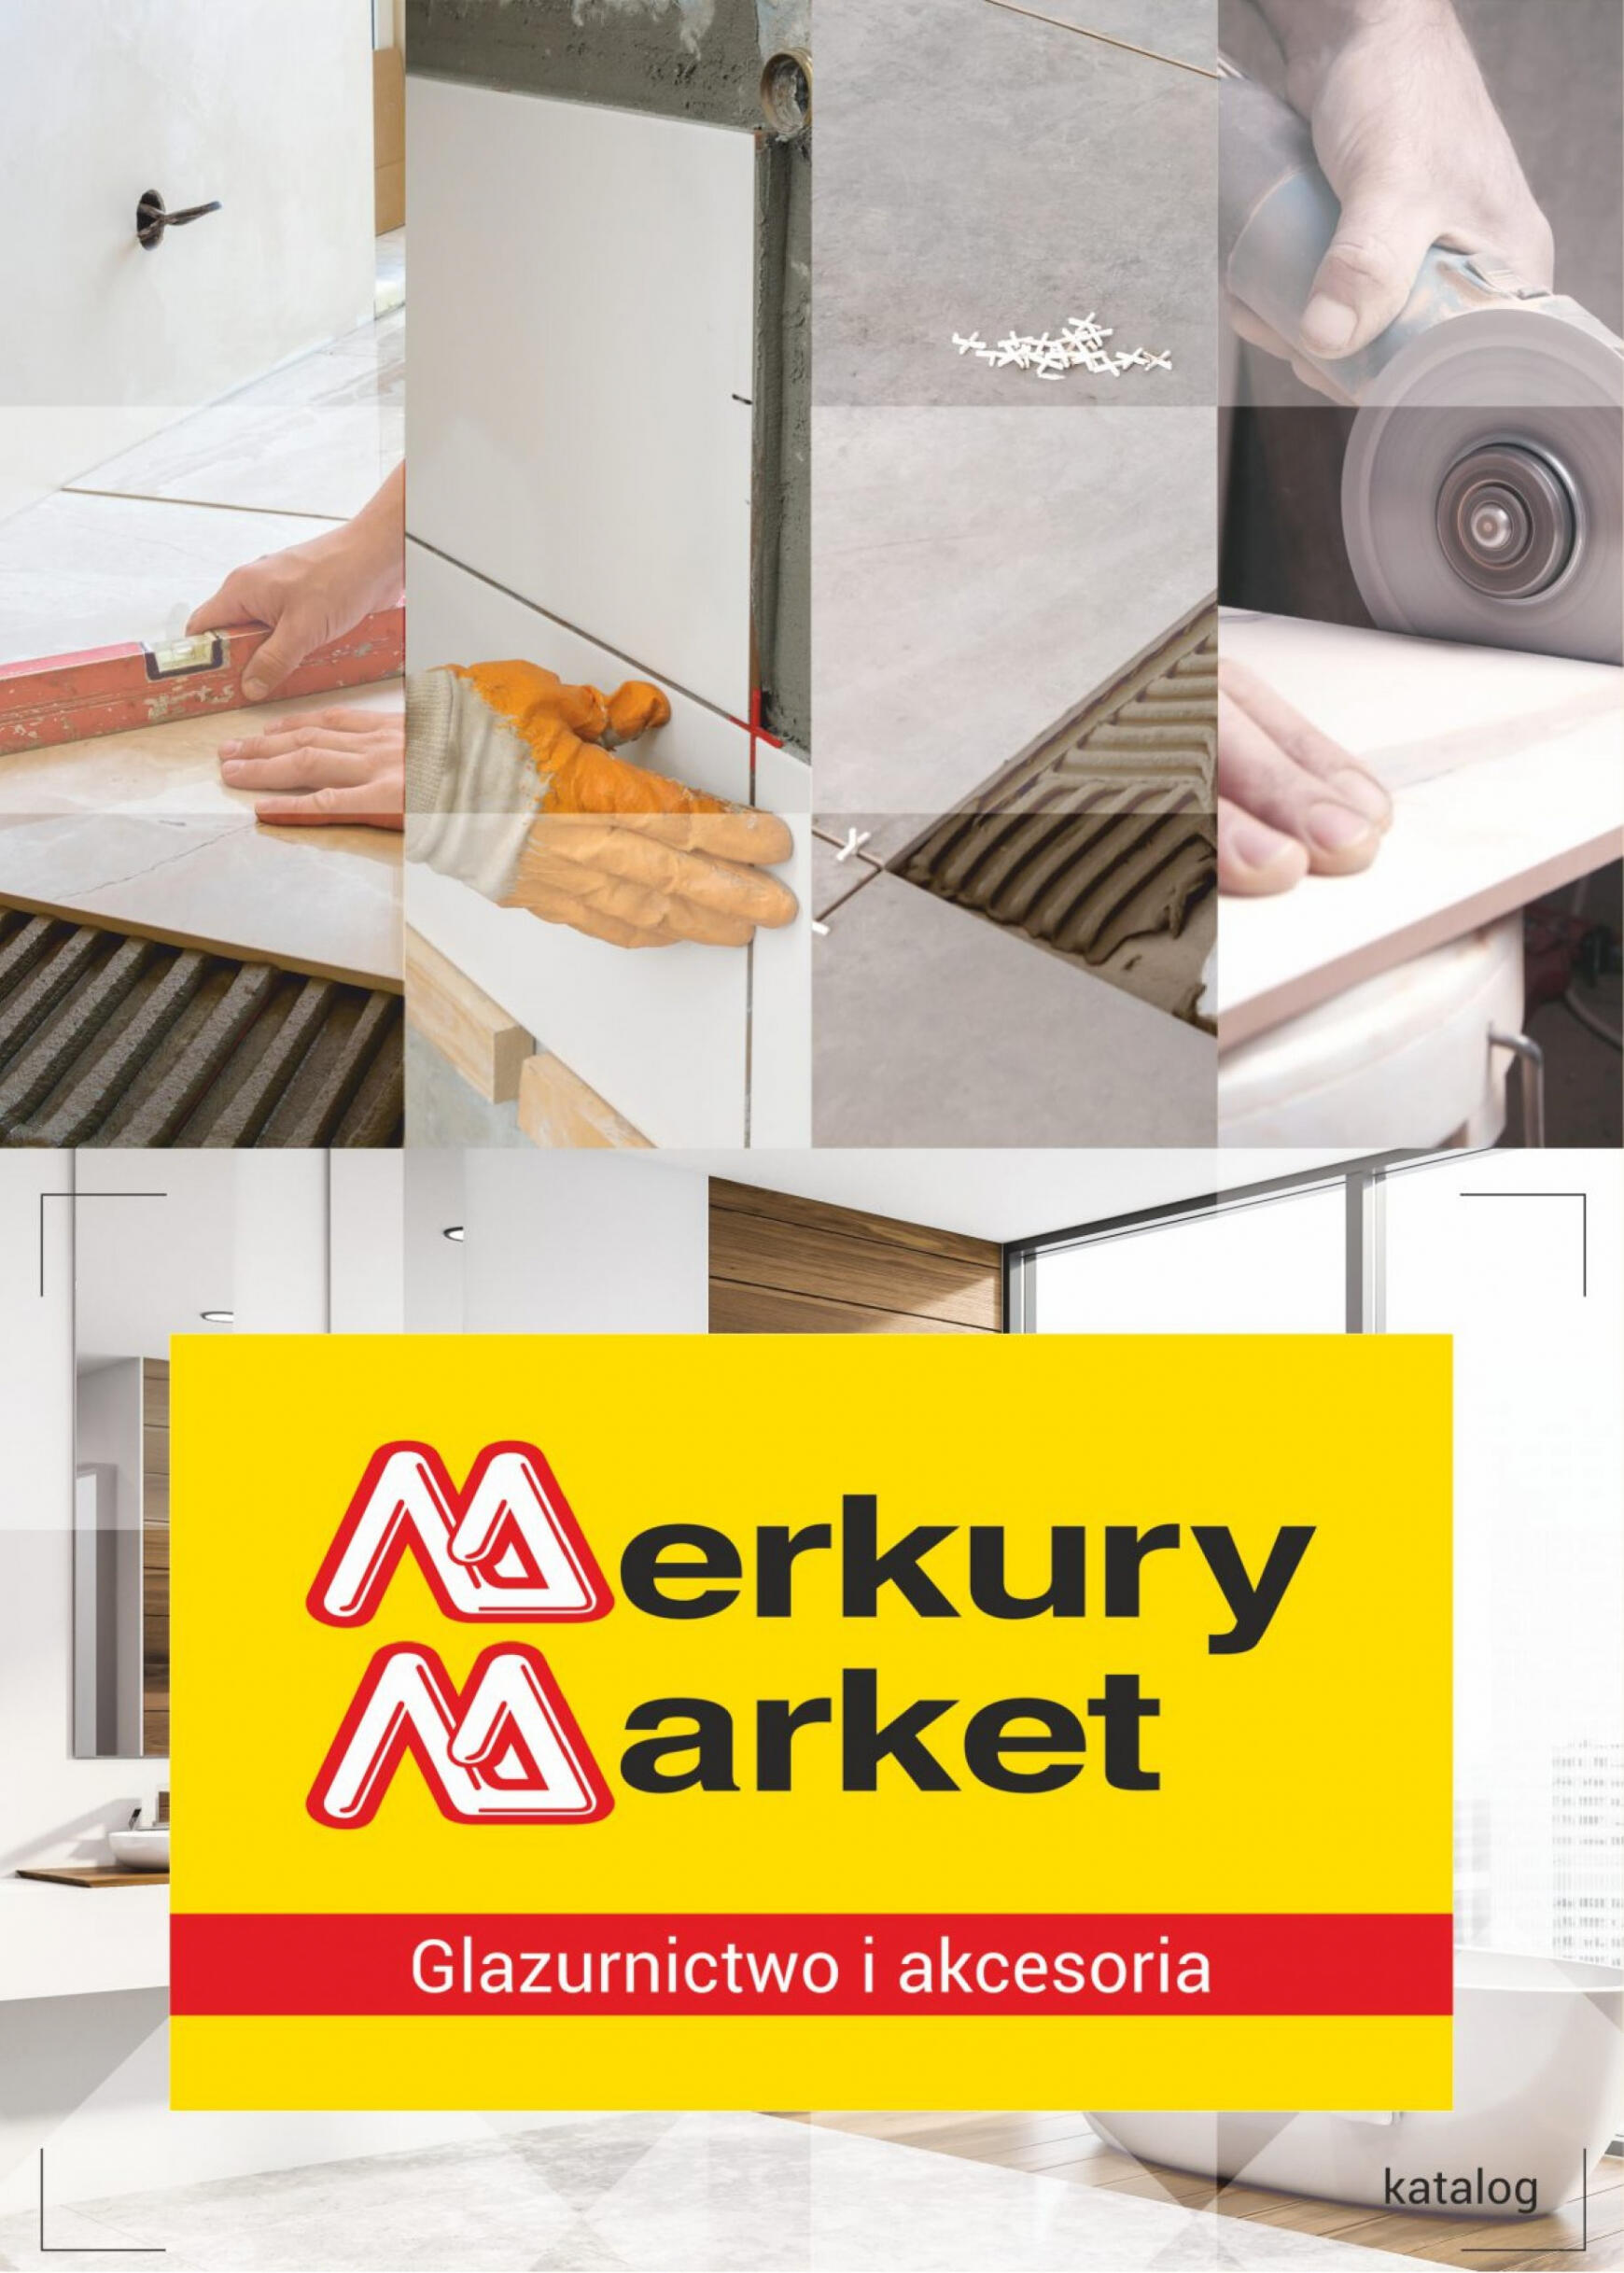 merkury-market - Merkury Market - Glazurnictwo